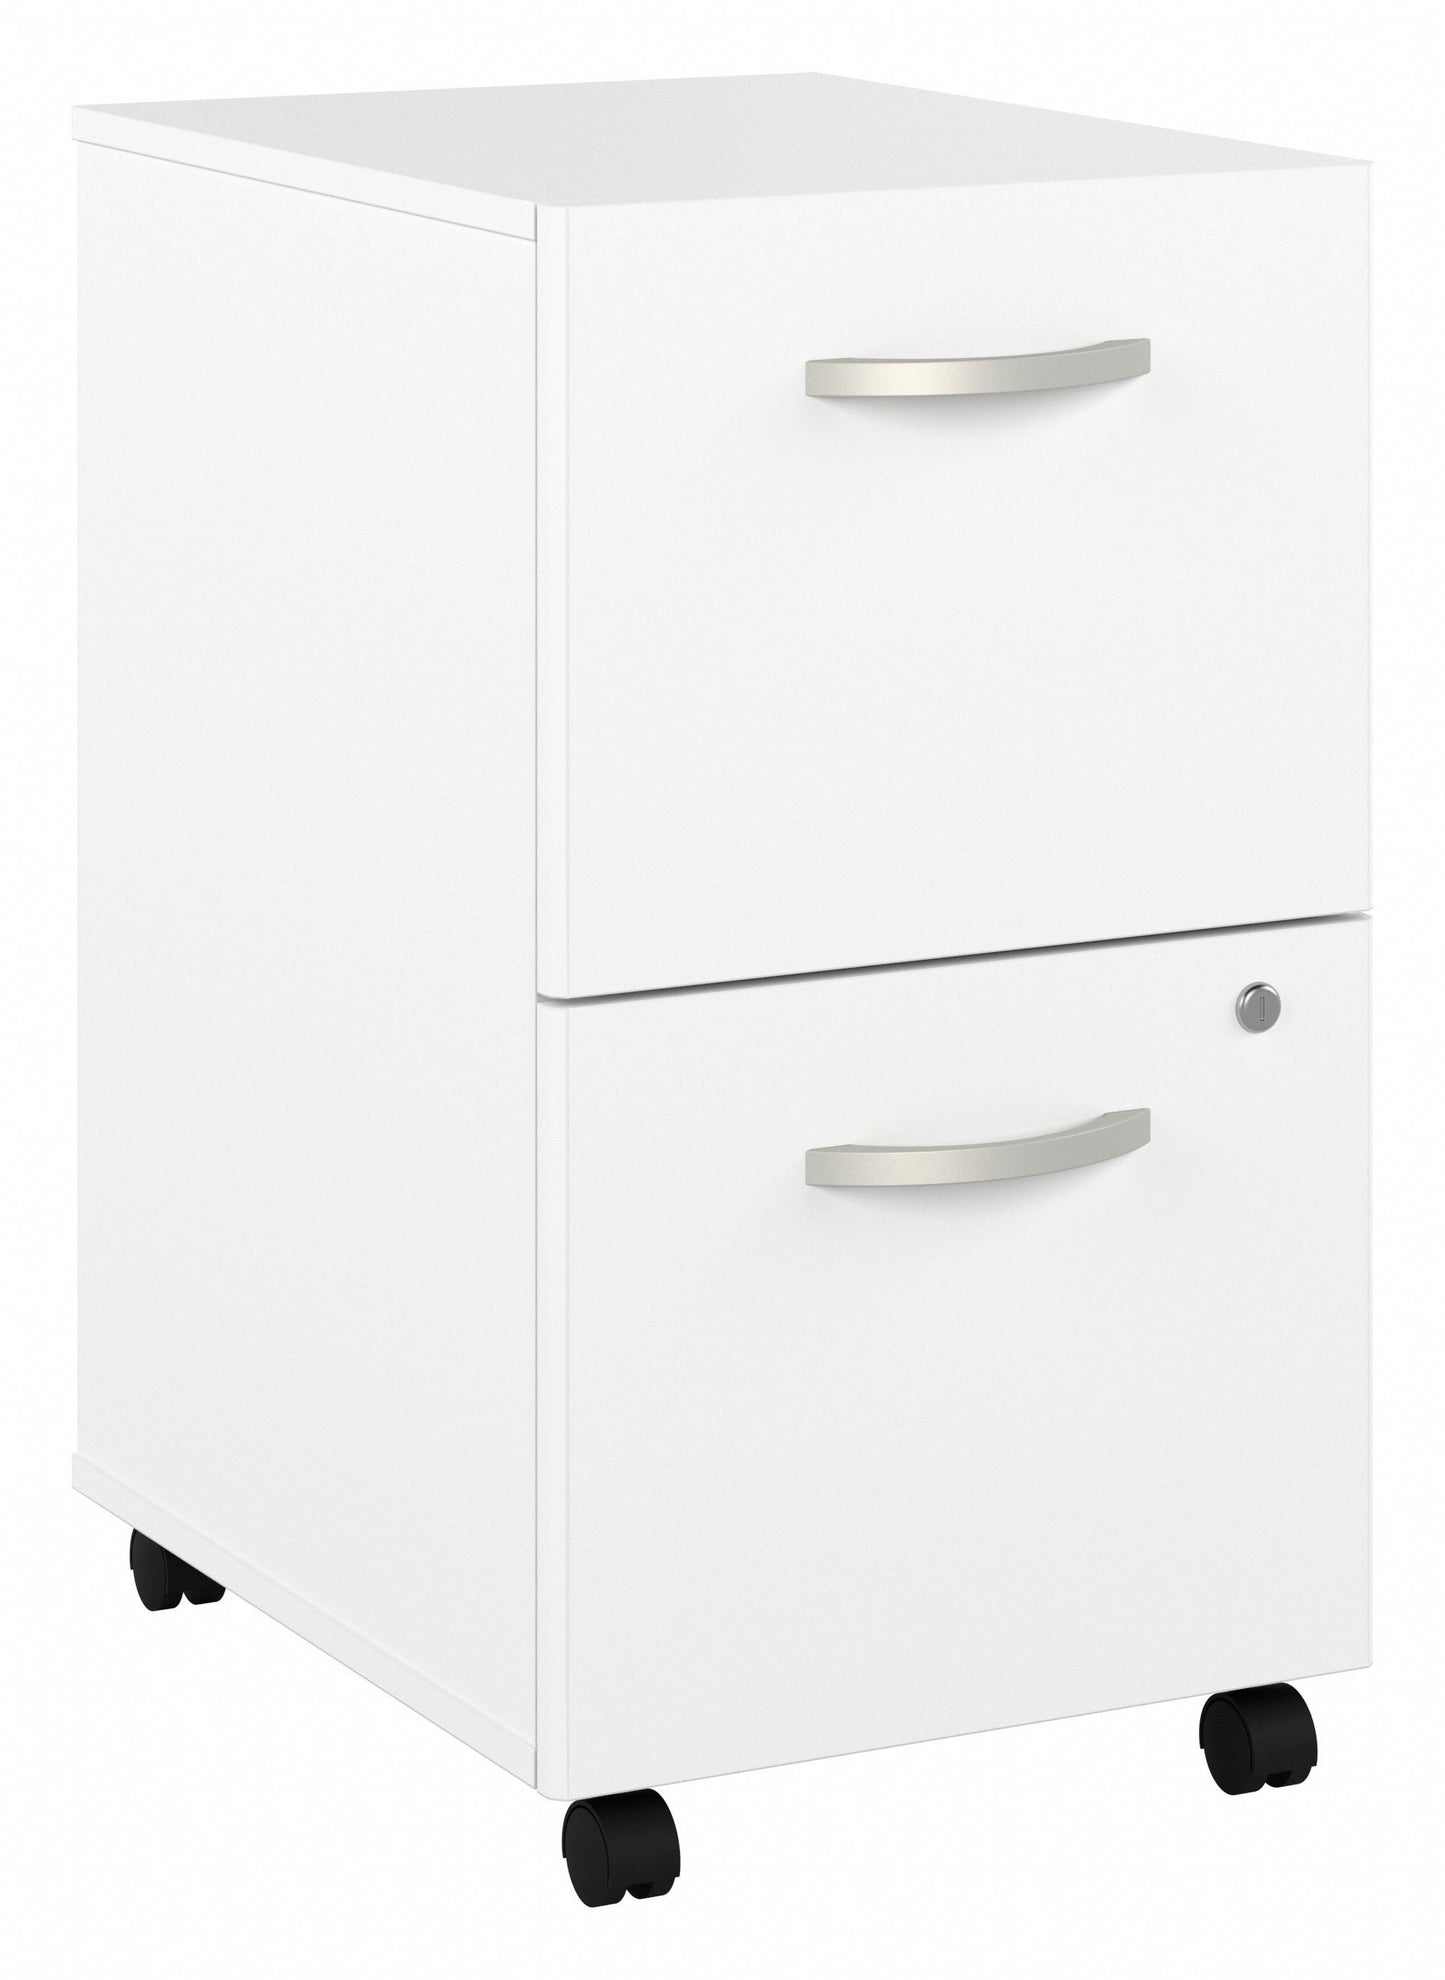 Bush Business Furniture Hybrid 2 Drawer Mobile File Cabinet in White - Assembled